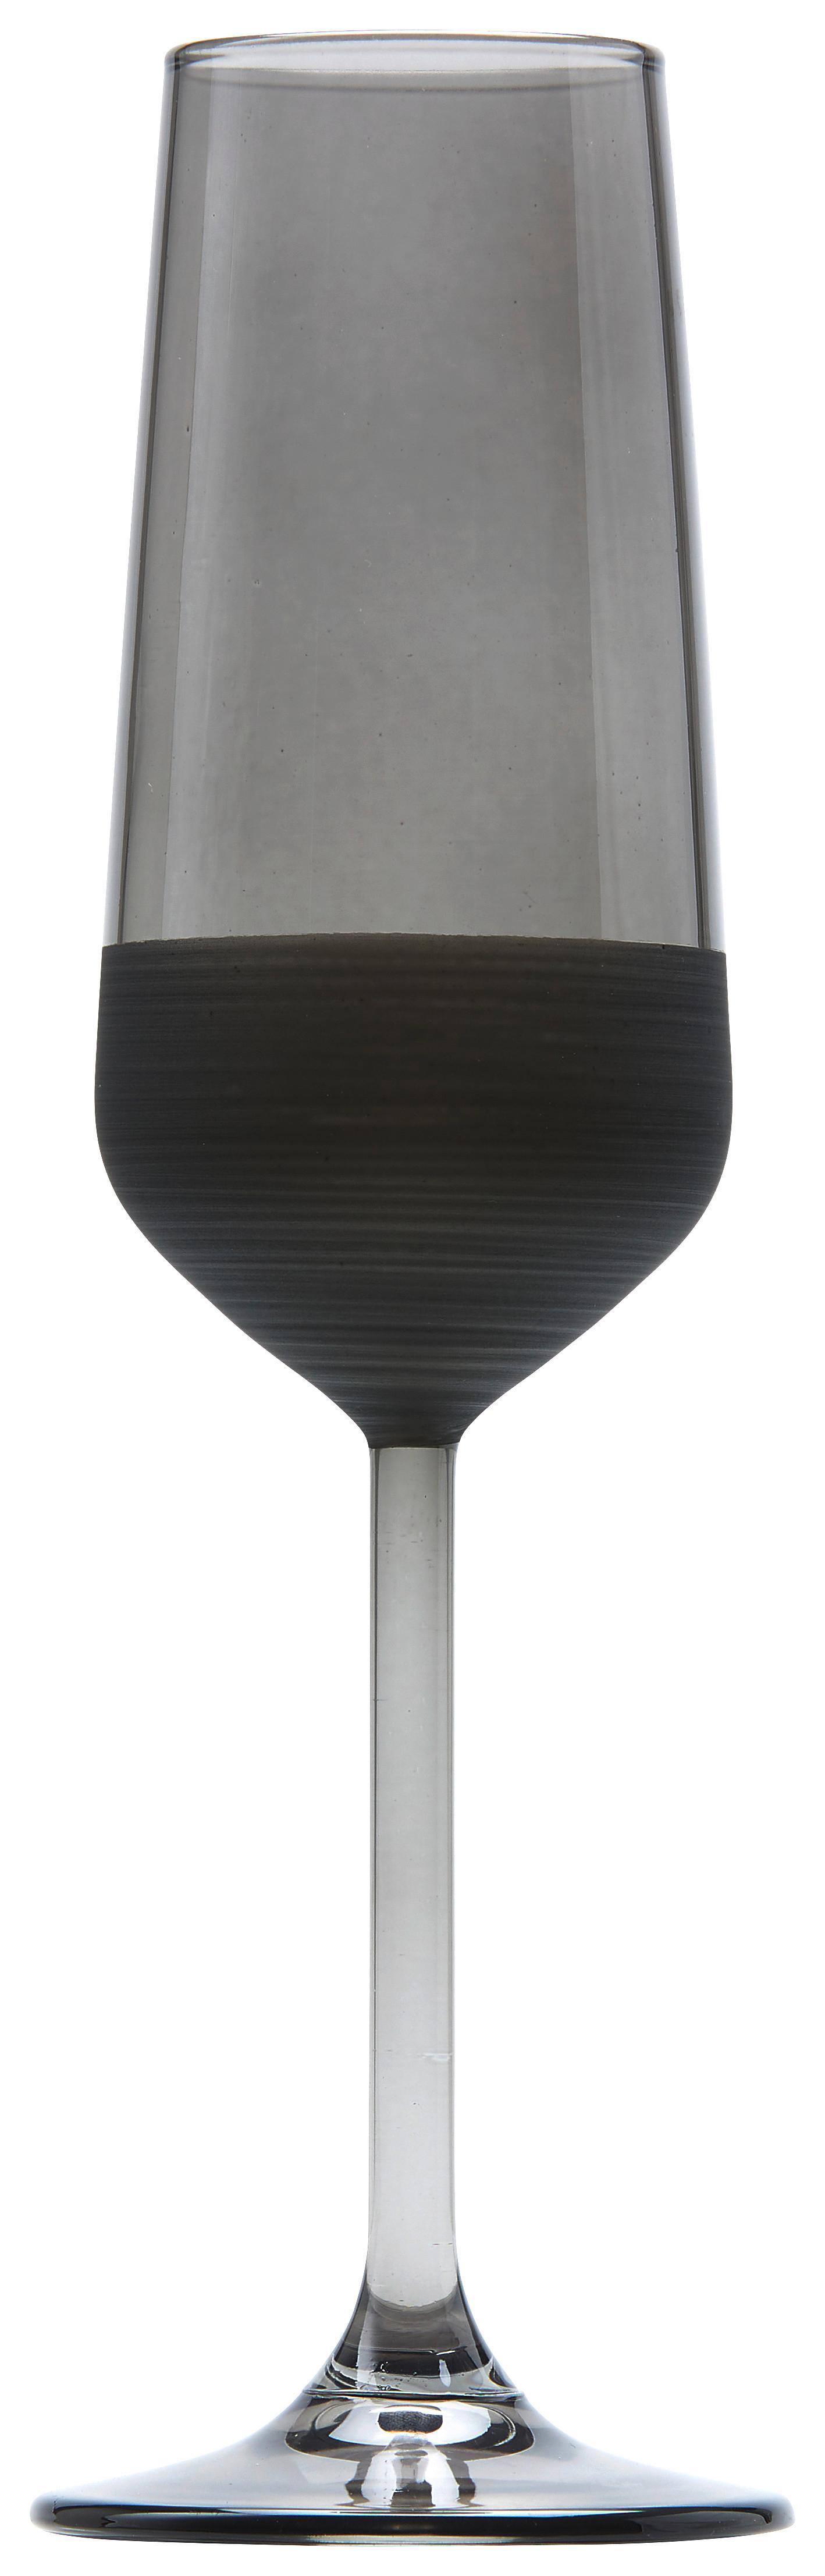 Pahar de vin spumant Black - negru, Modern, sticlă (4,5/22,6cm) - Premium Living